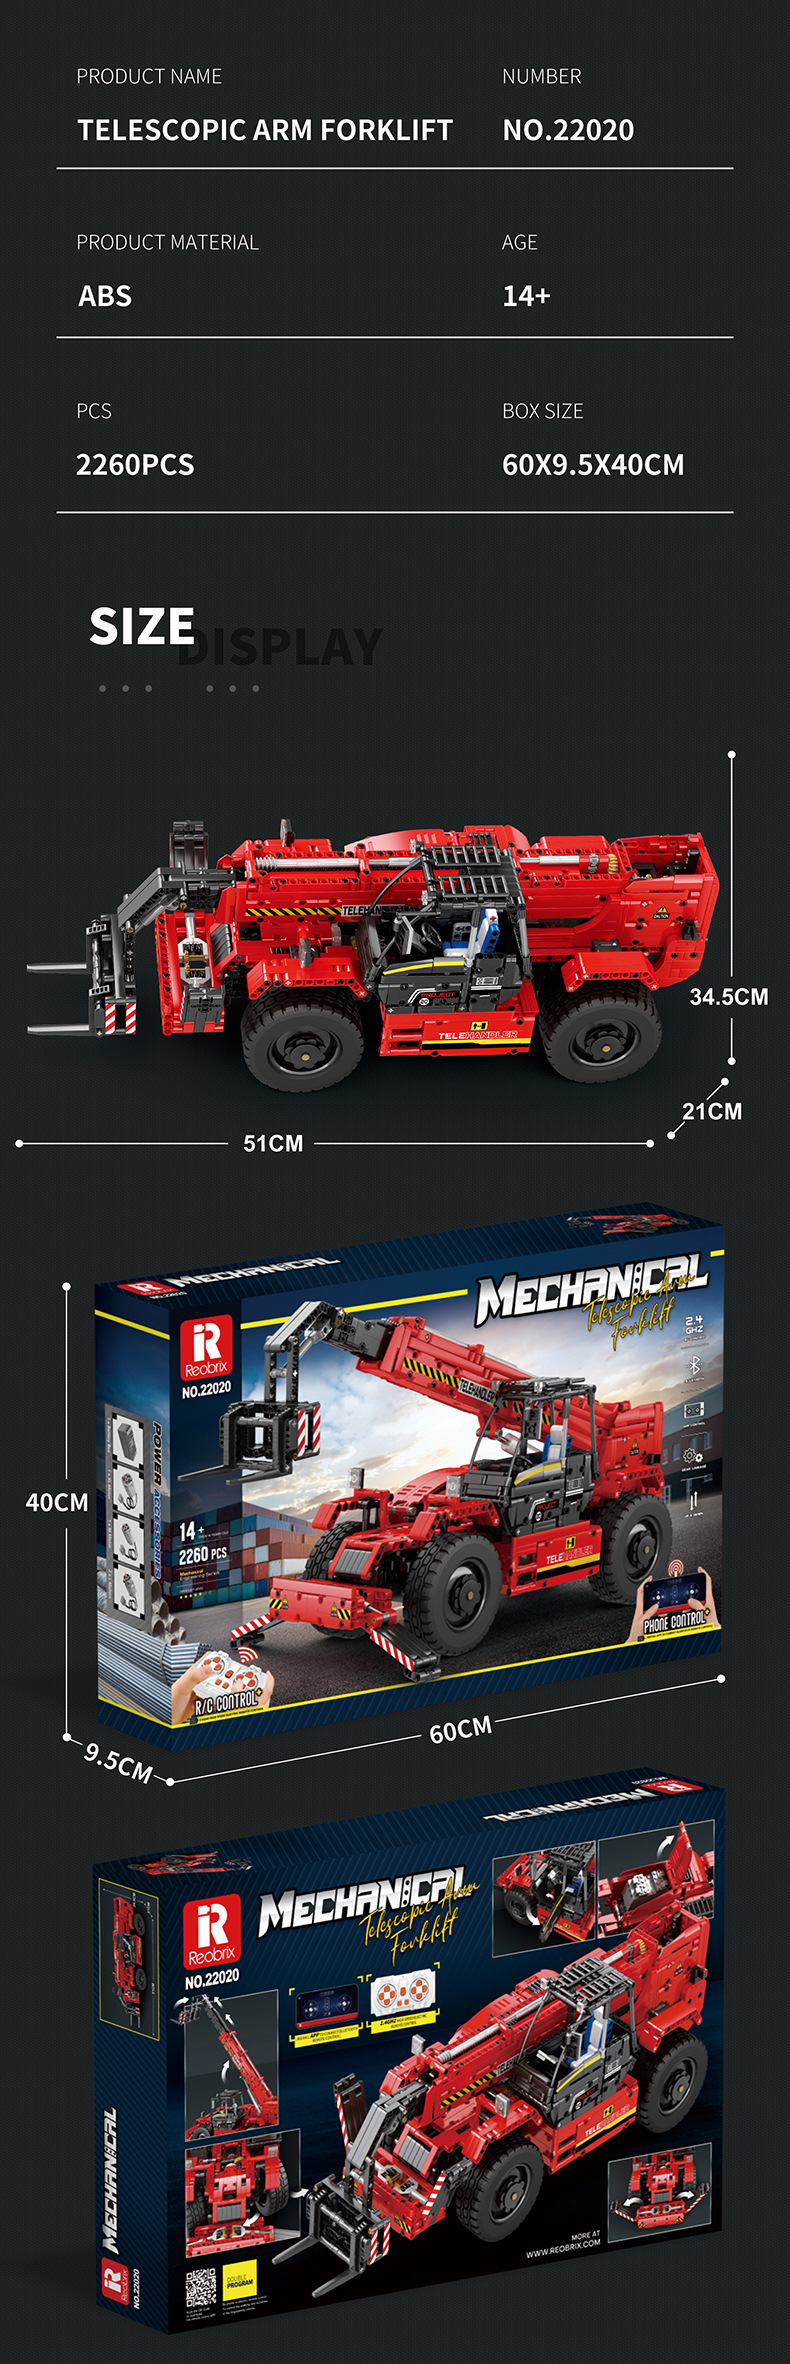 REOBRIX 22020 Telescopic Forklift Truck Technology Machinery Series Building Blocks Toy Set